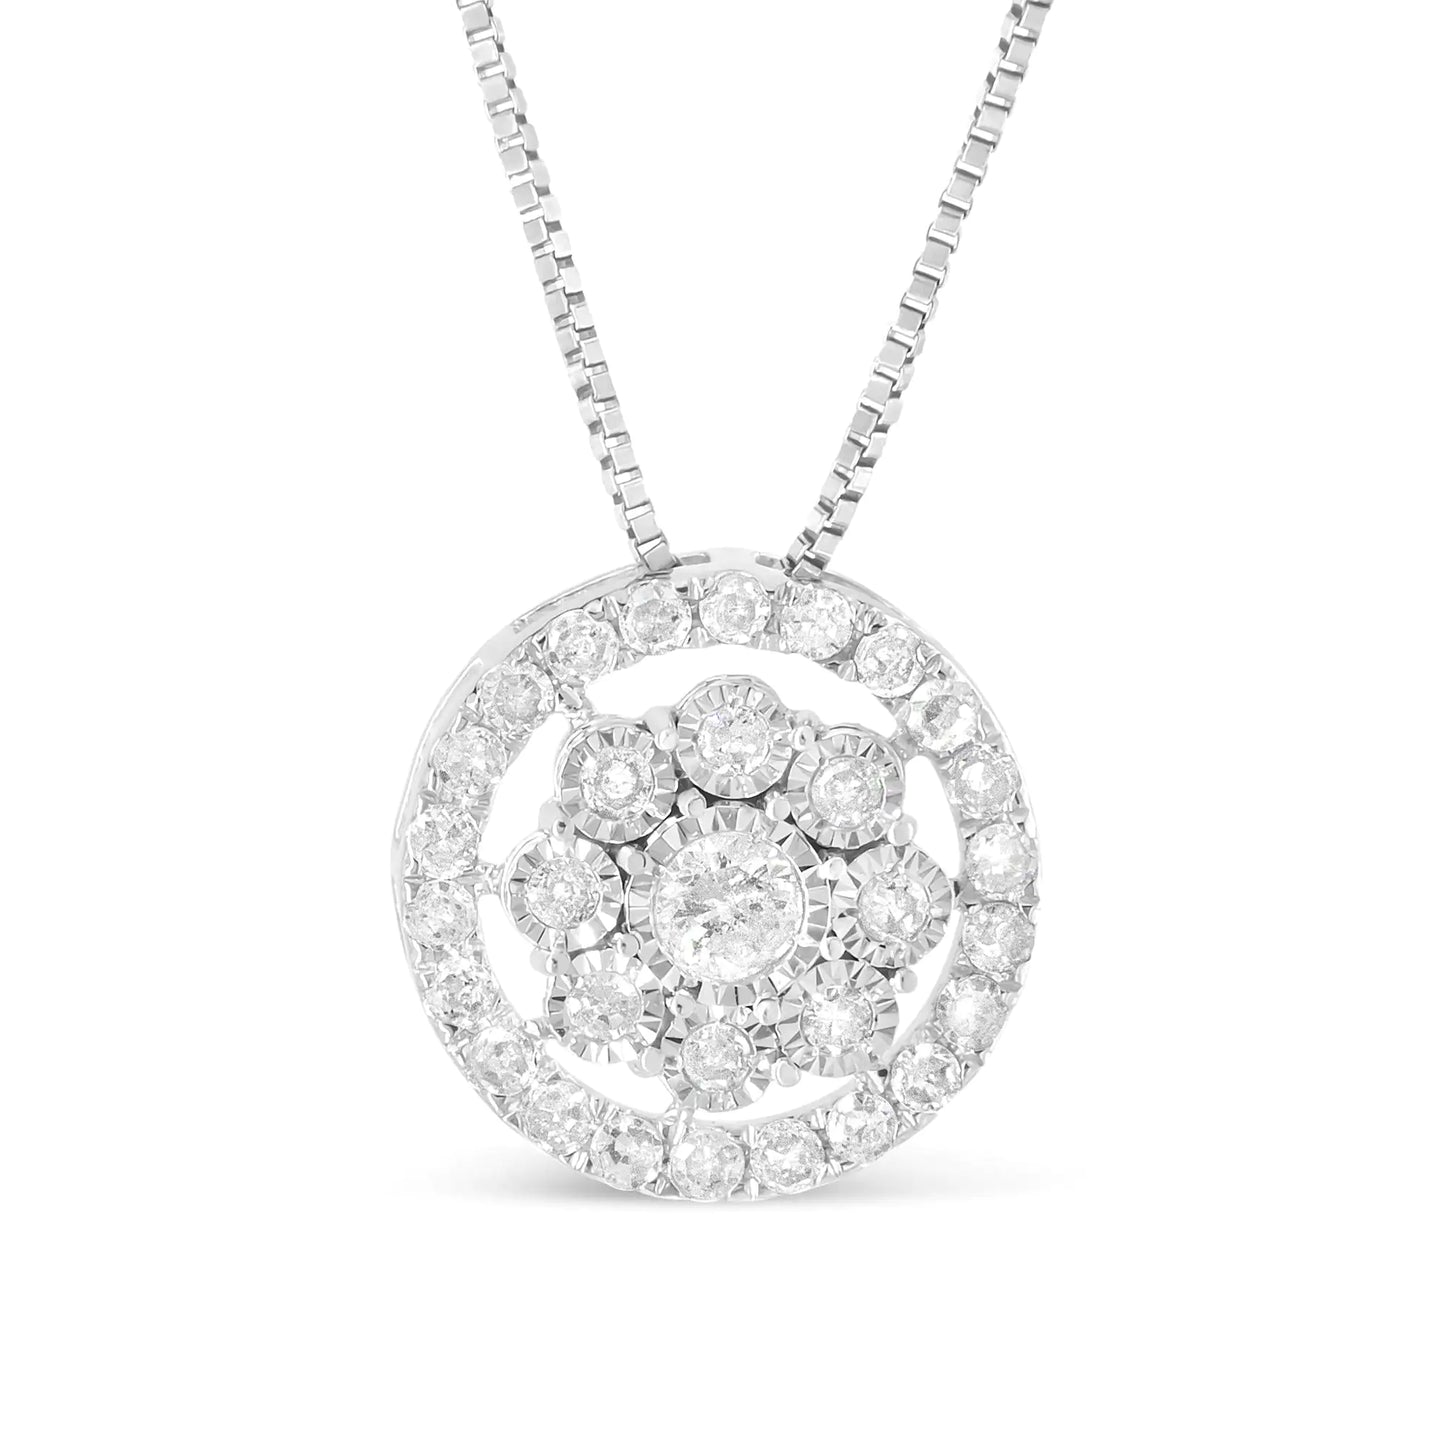 10K White Gold 1/2 Cttw Miracle Set Diamond Cluster Flower Halo 18" Pendant Necklace (I-J Color, I1-I2 Clarity)